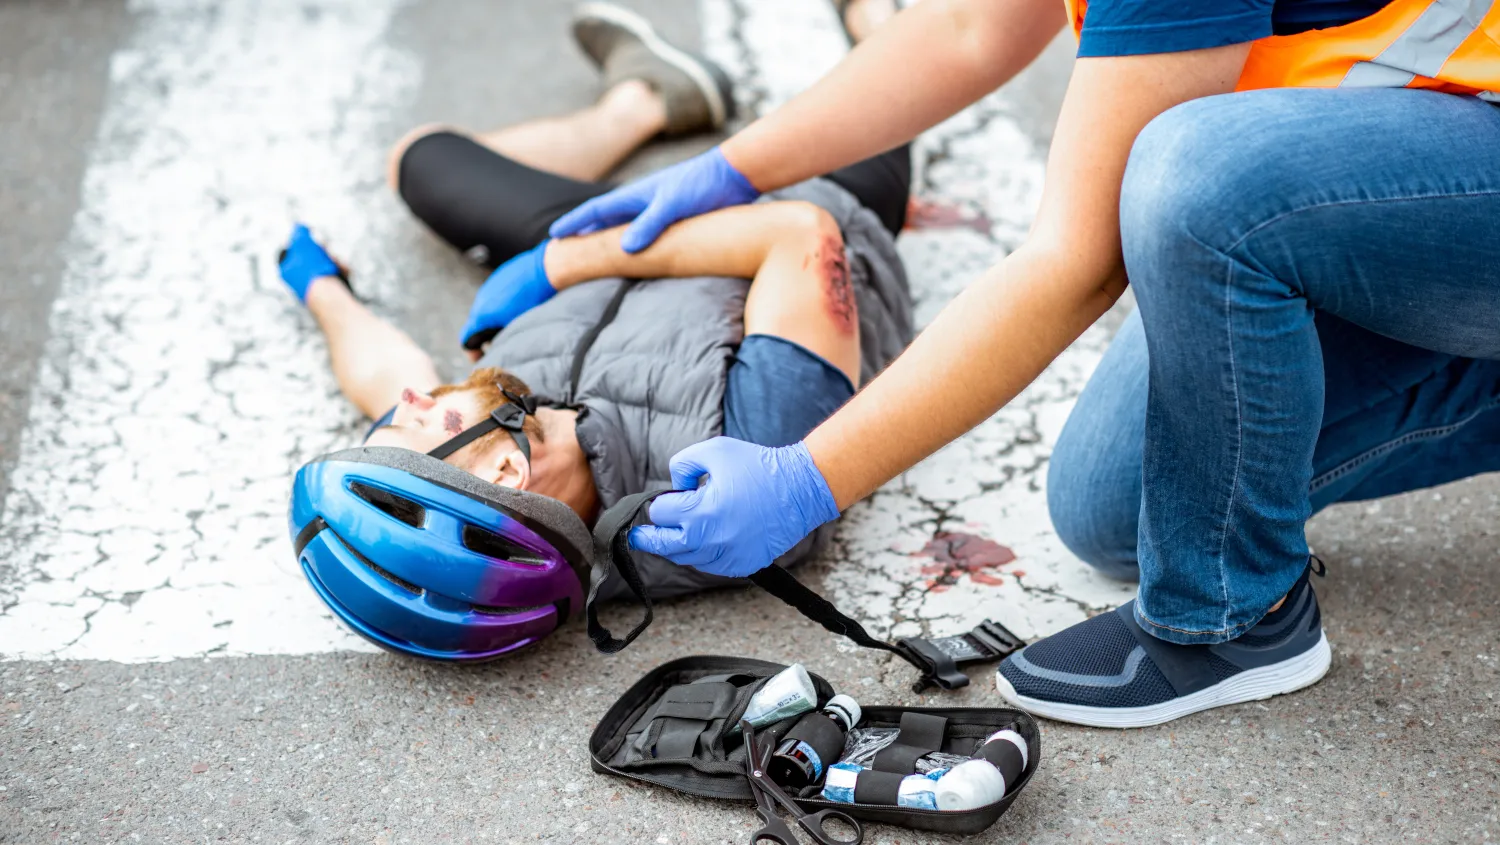 CIEMT- Cyclist Accident